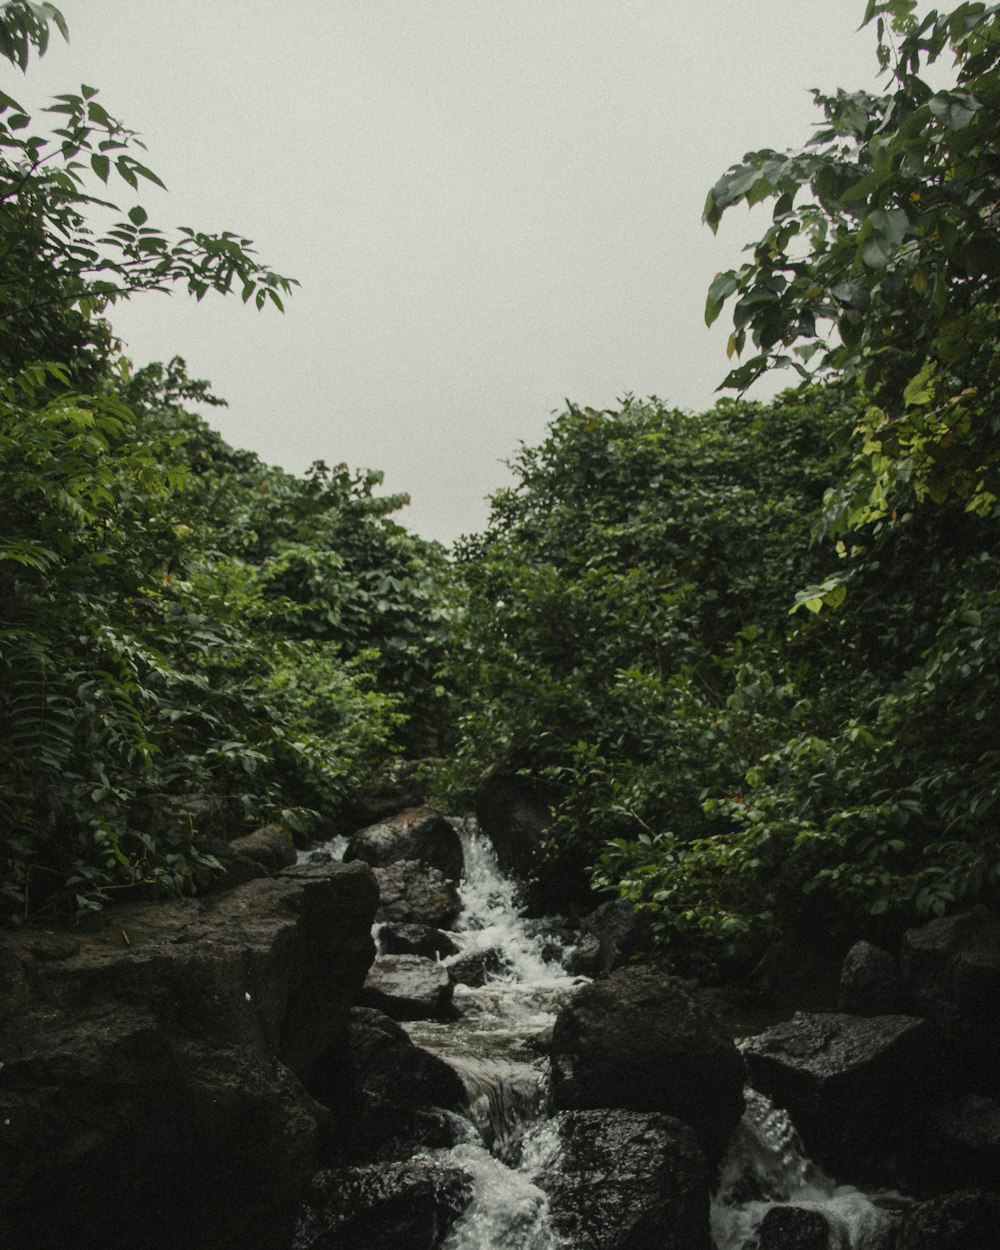 water falls between green trees